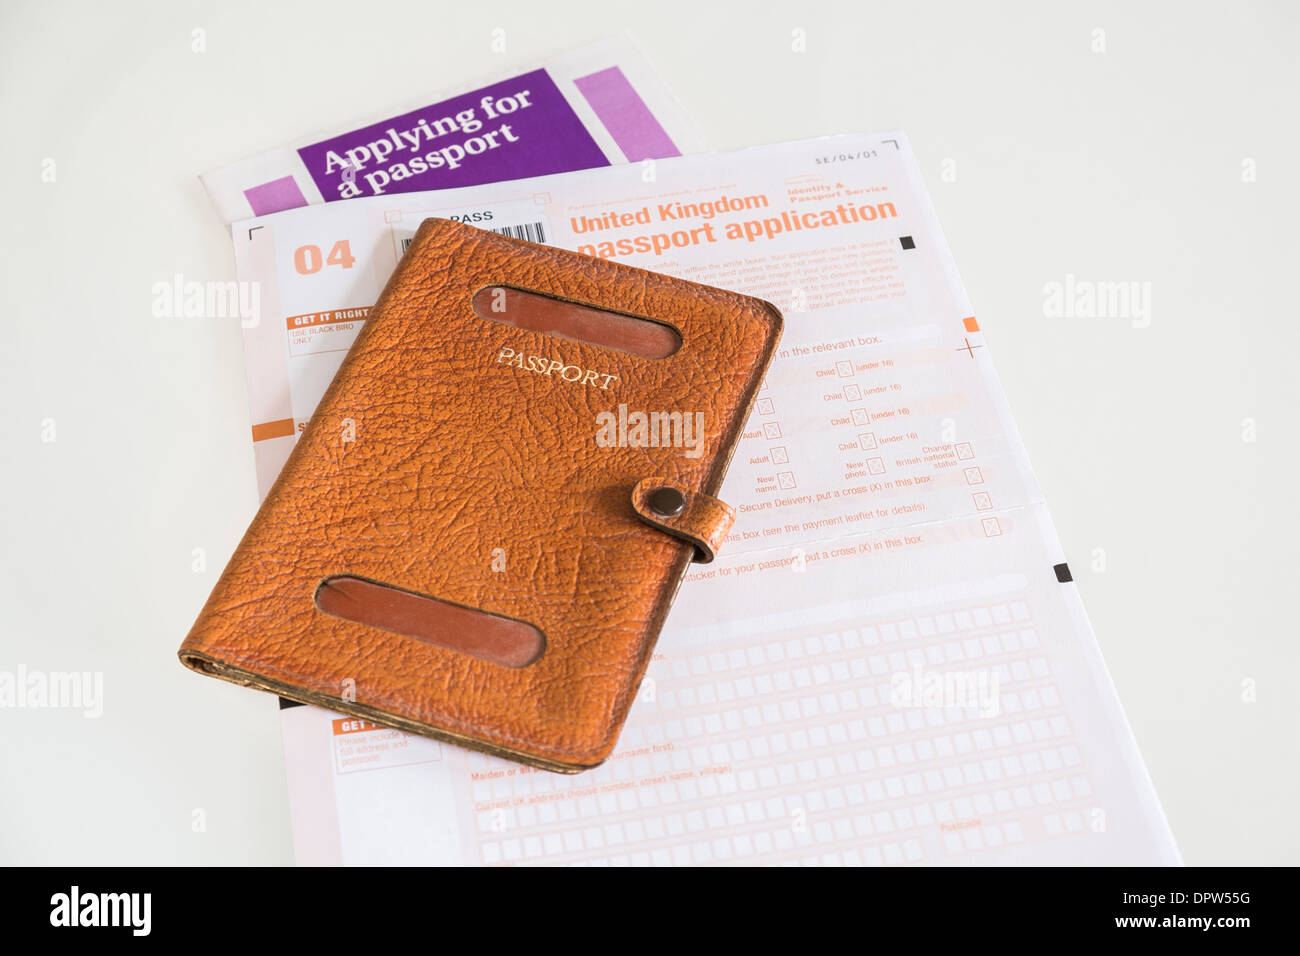 Passport Holder for Kids Passport Cover Passport Case Passport 